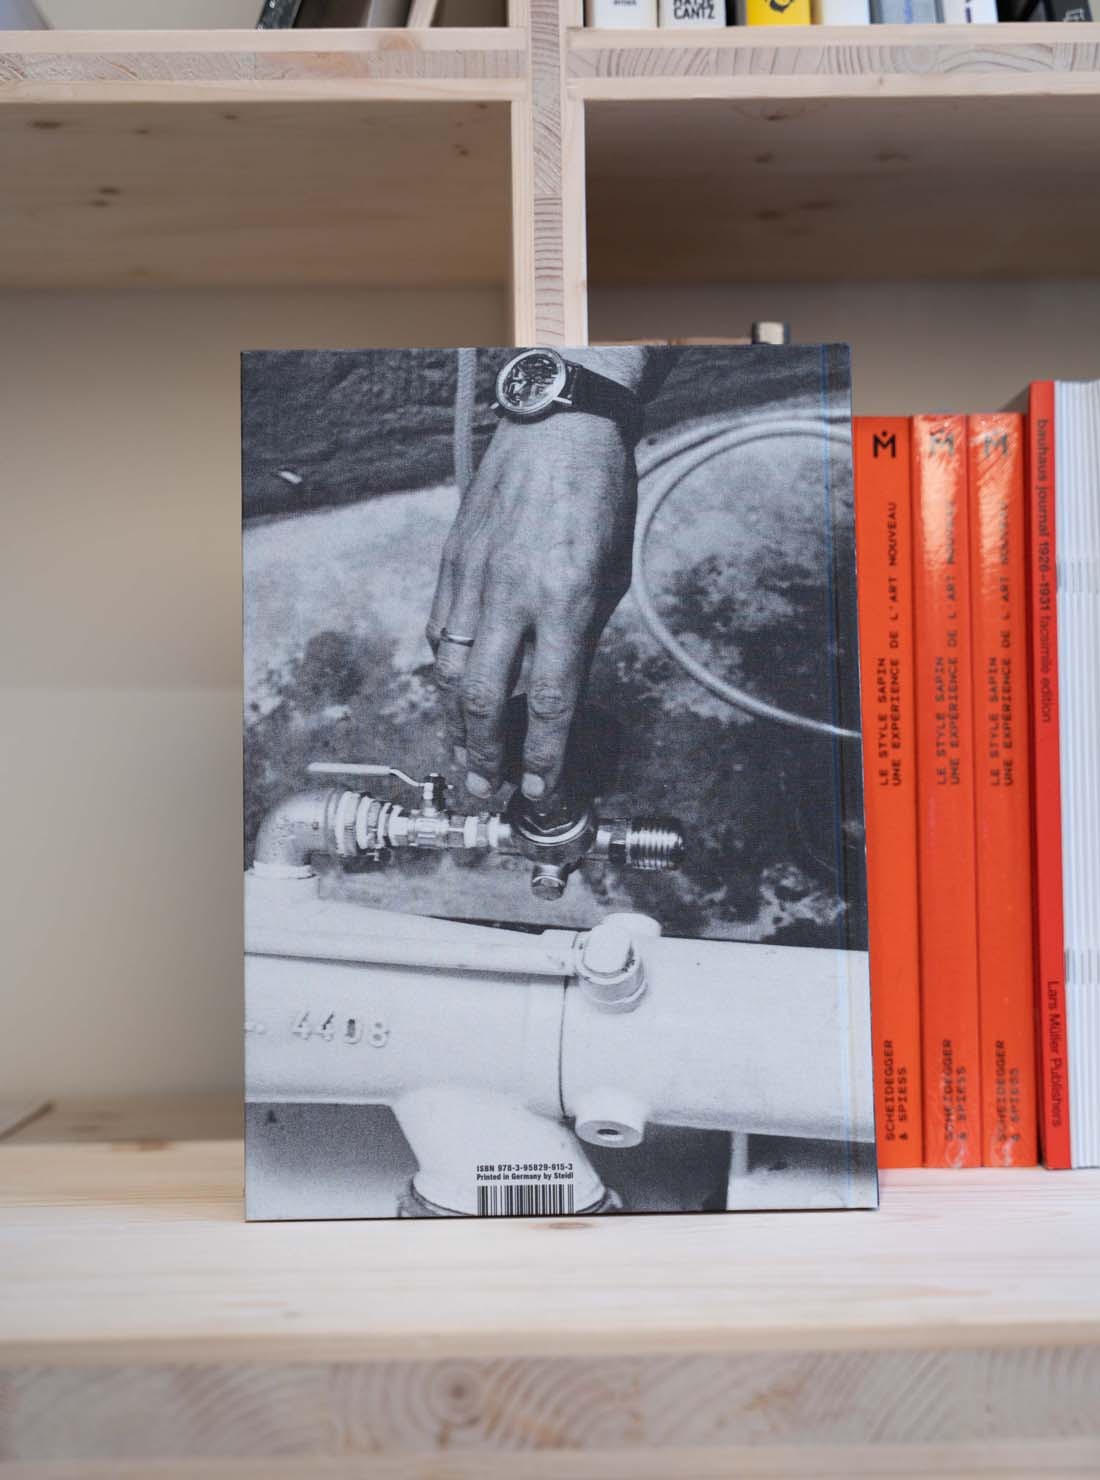 4 Books In A Box - Joseph Beuys